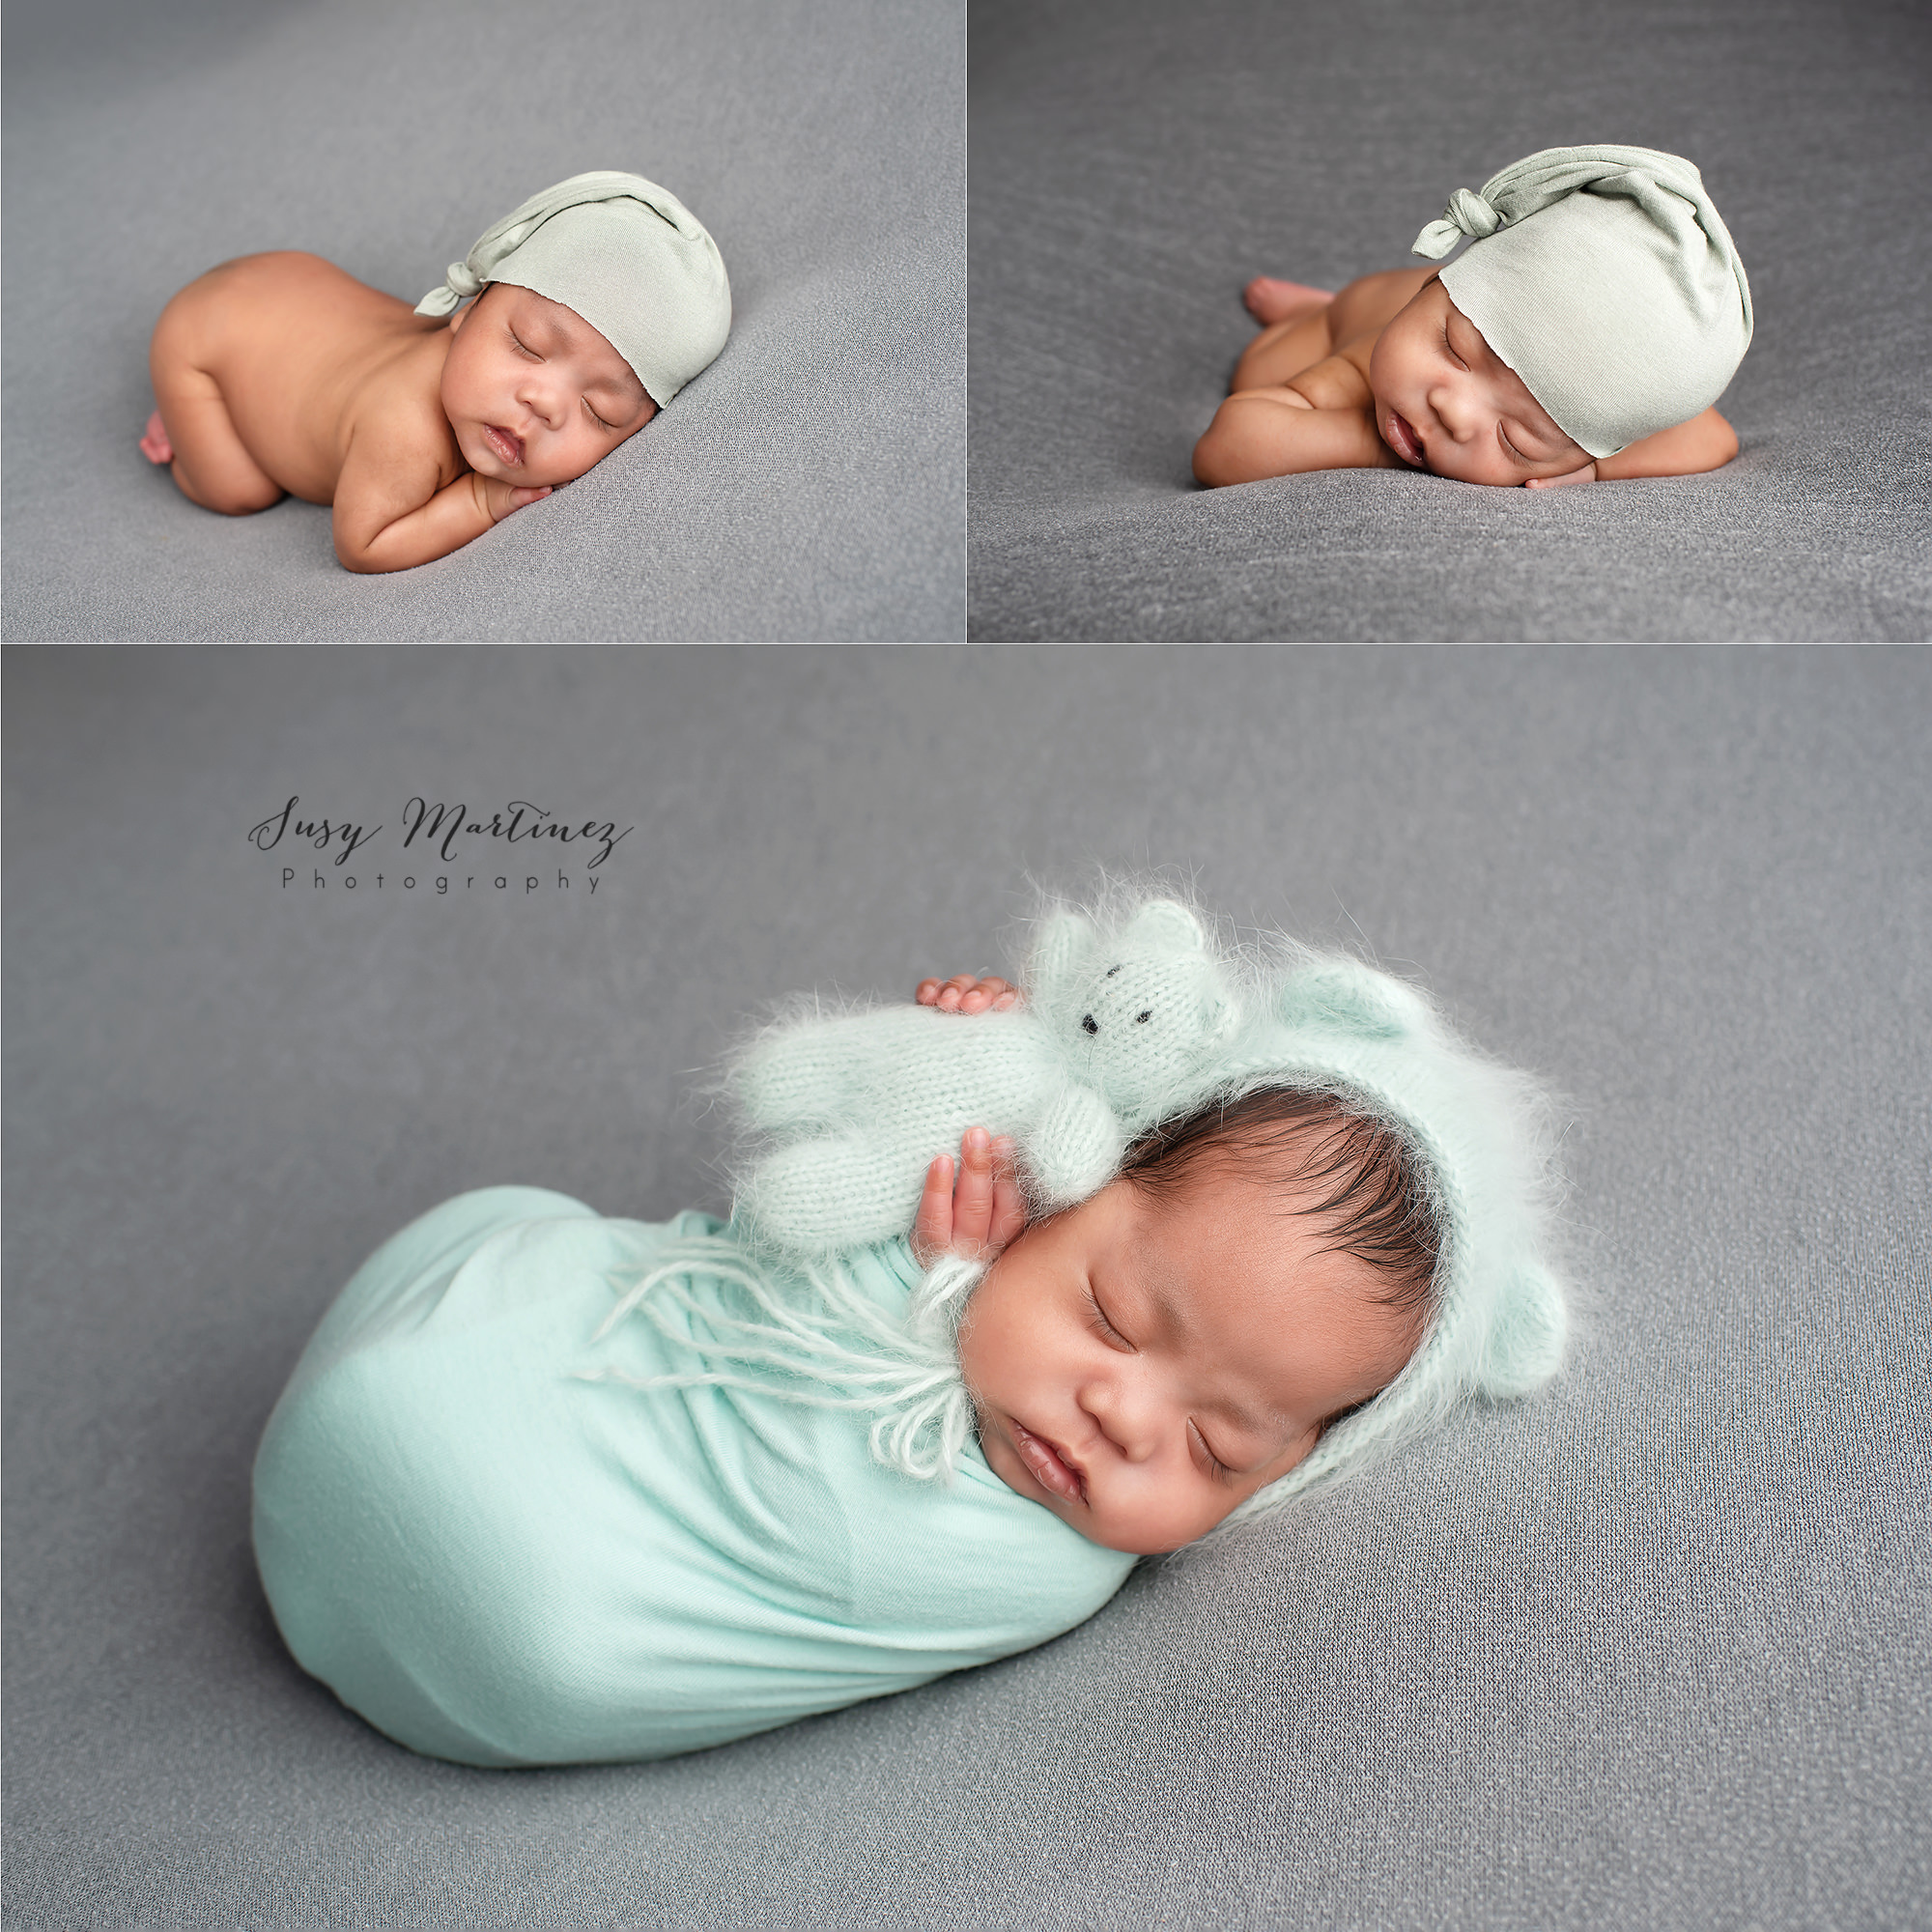 newborn baby sleeps in knit cap and holds sea foam green lovey